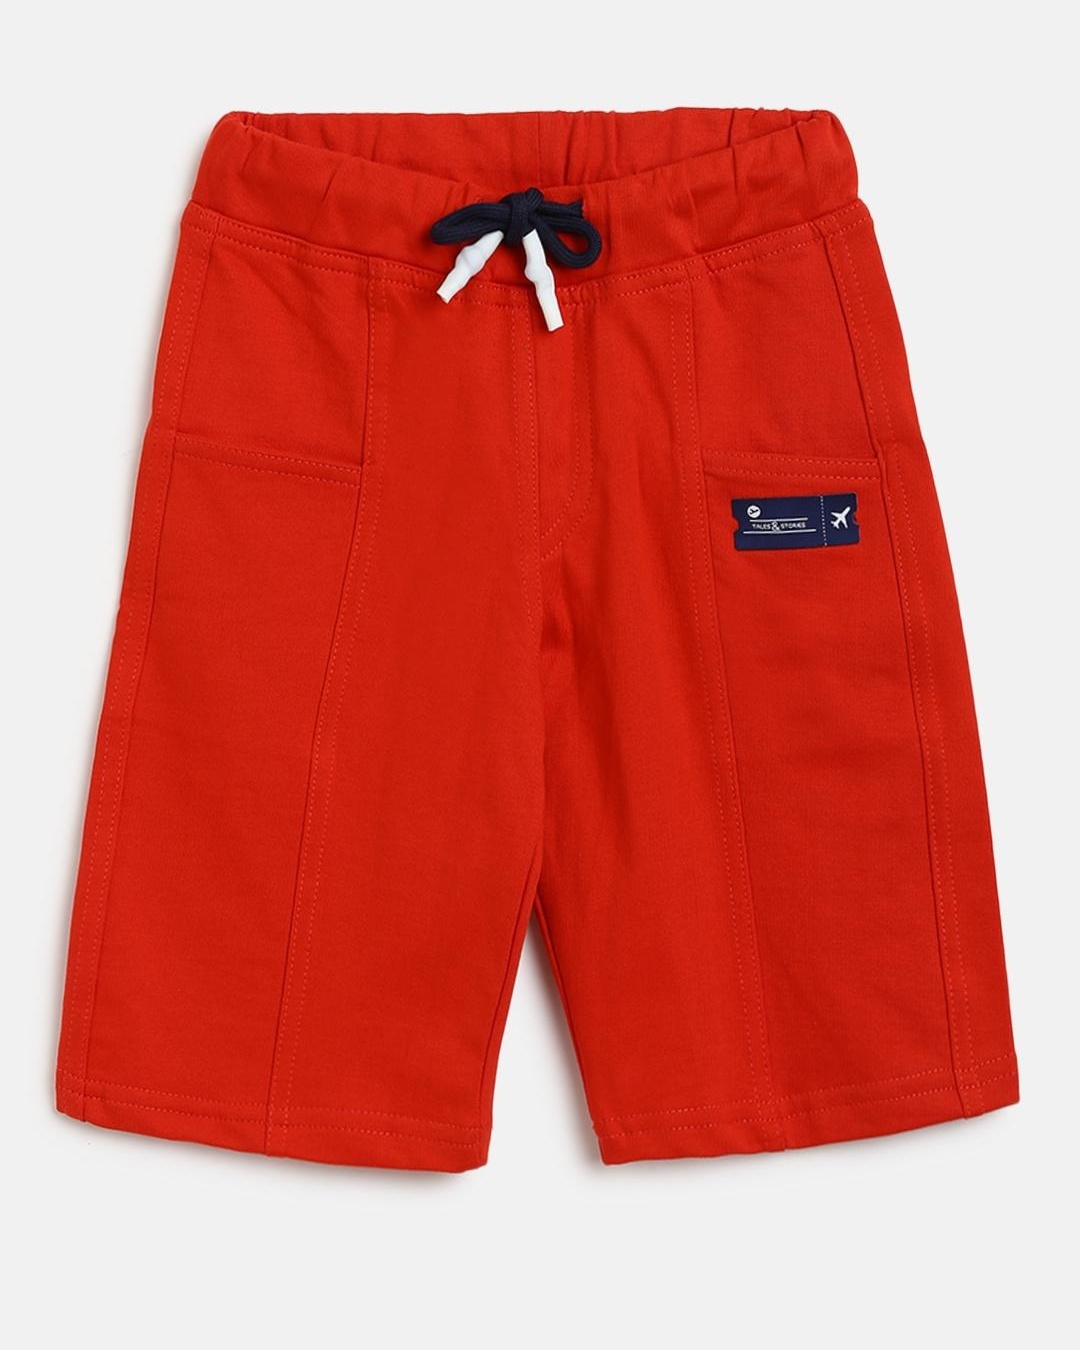 Buy Boys Red Shorts Online at Bewakoof